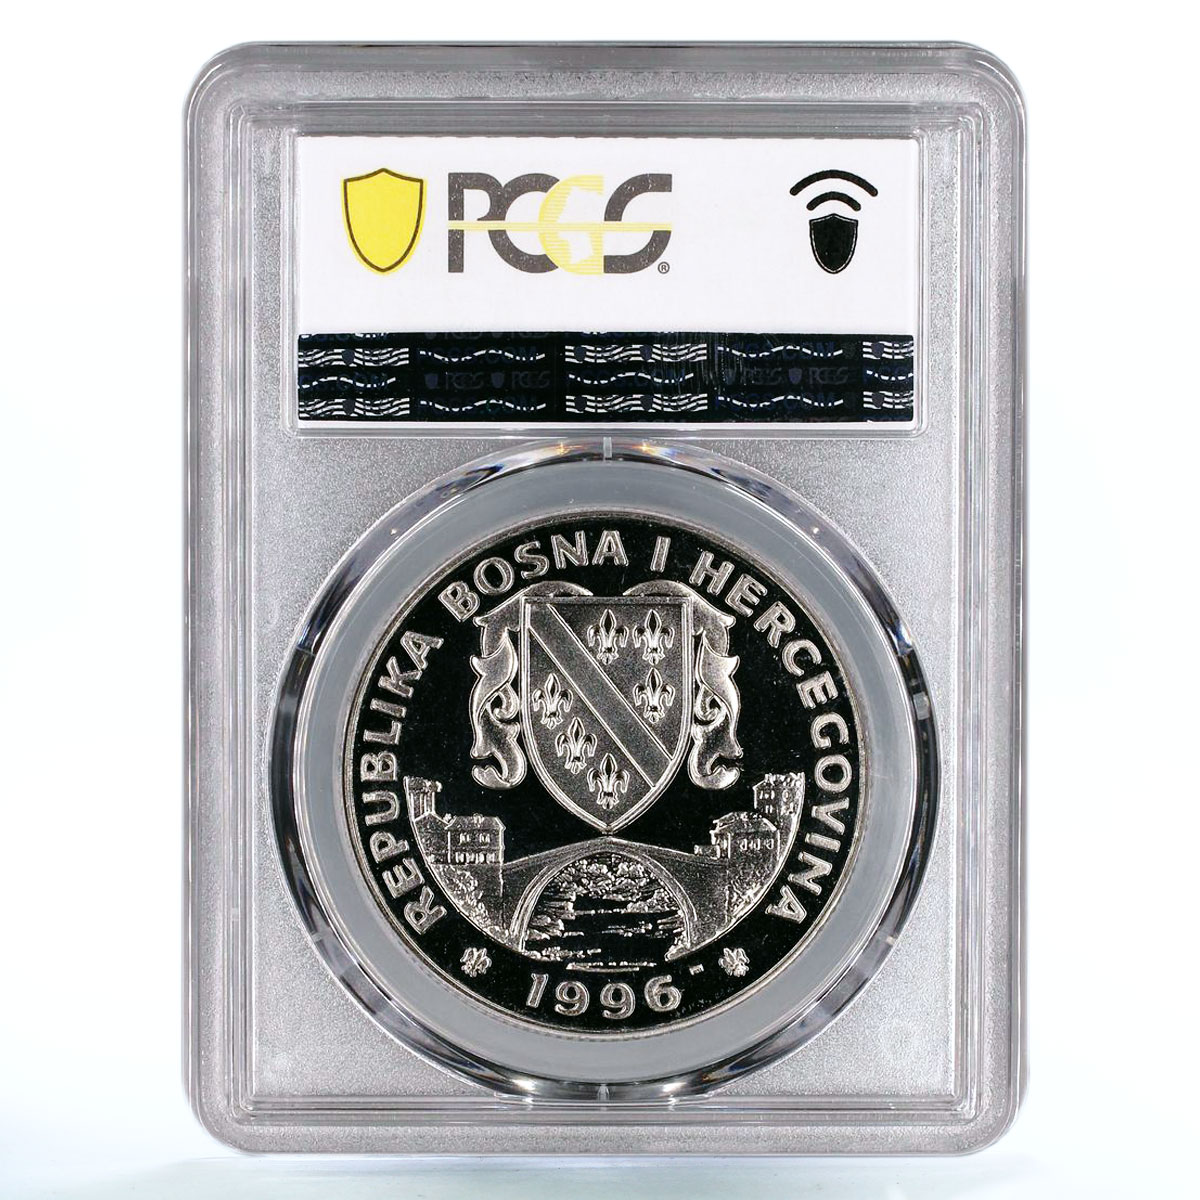 Bosnia and Herzegovina 500 dinara Olympic Games Jumper MS66 PCGS Ni coin 1996